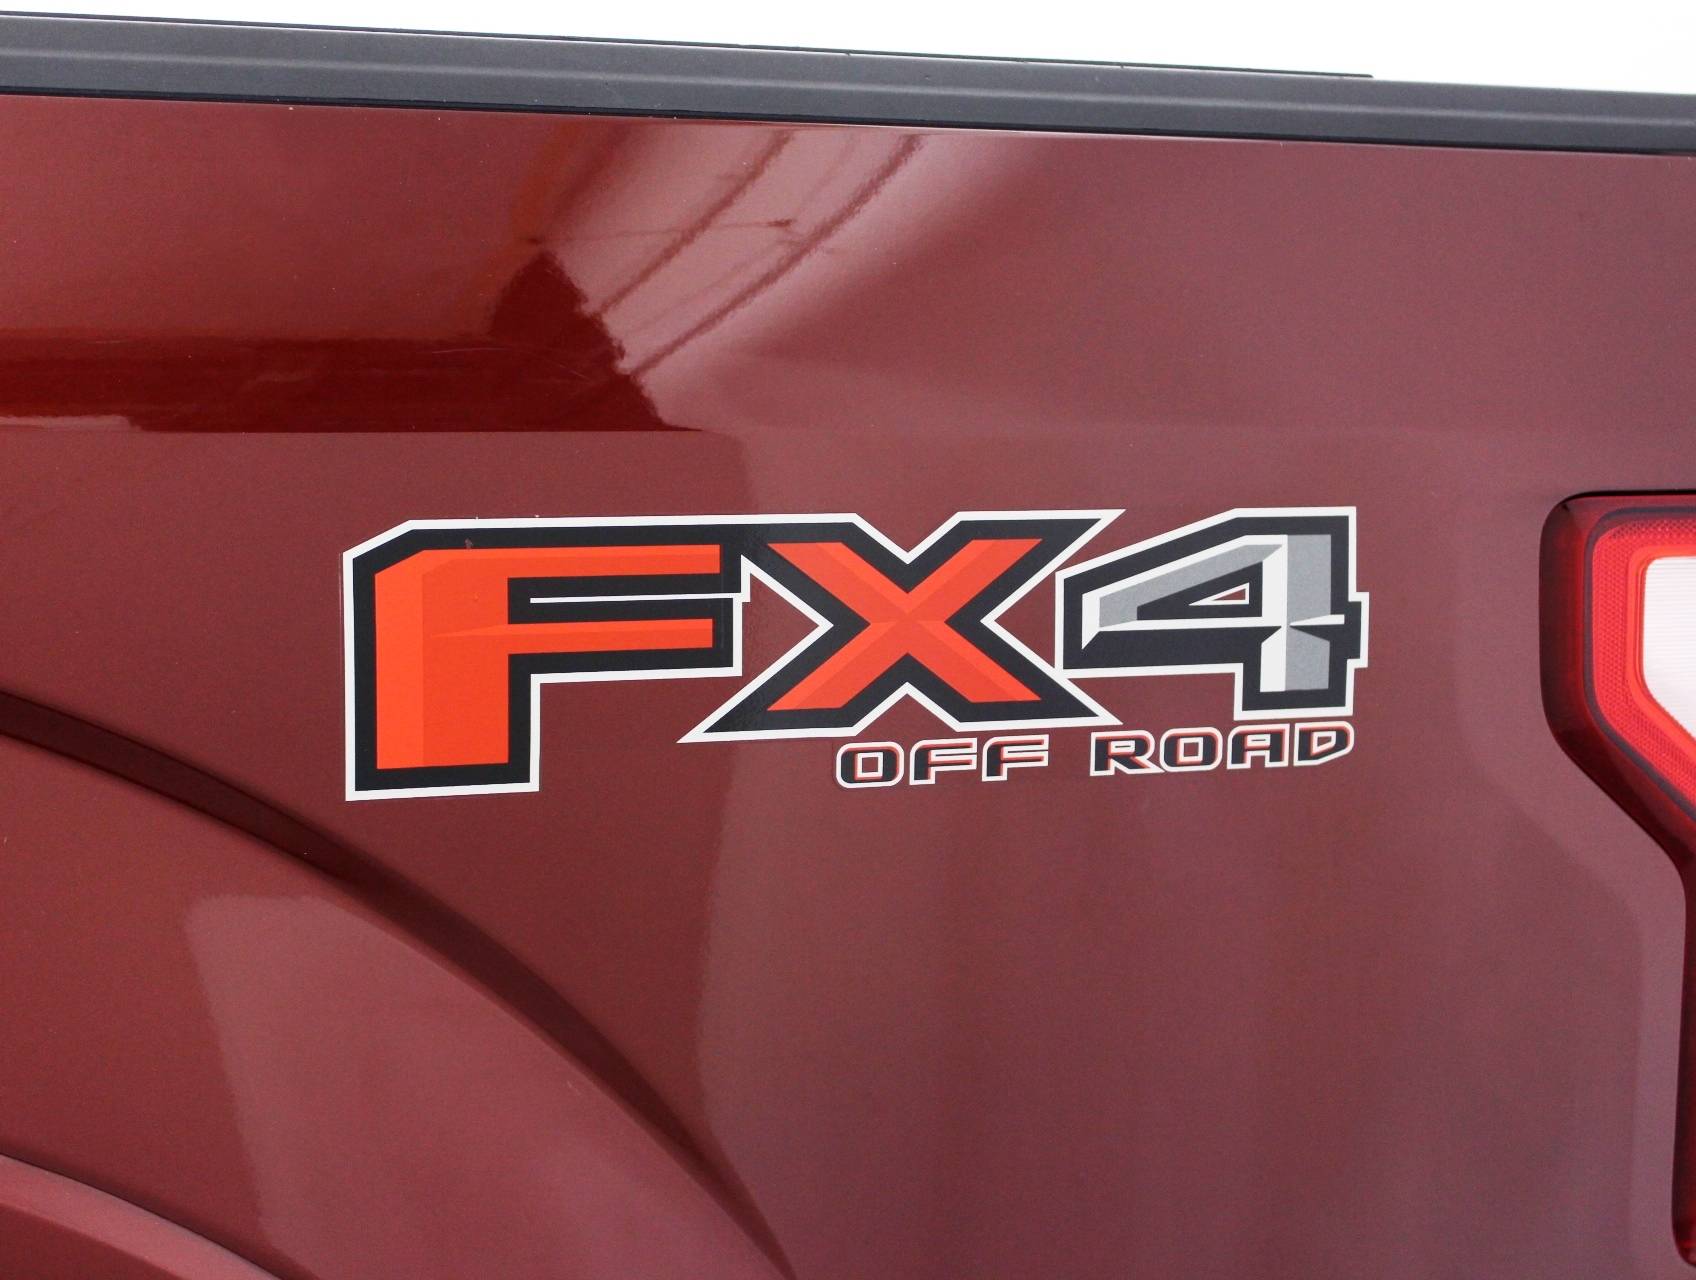 Florida Fine Cars - Used FORD F 150 2015 MIAMI Lariat Fx4